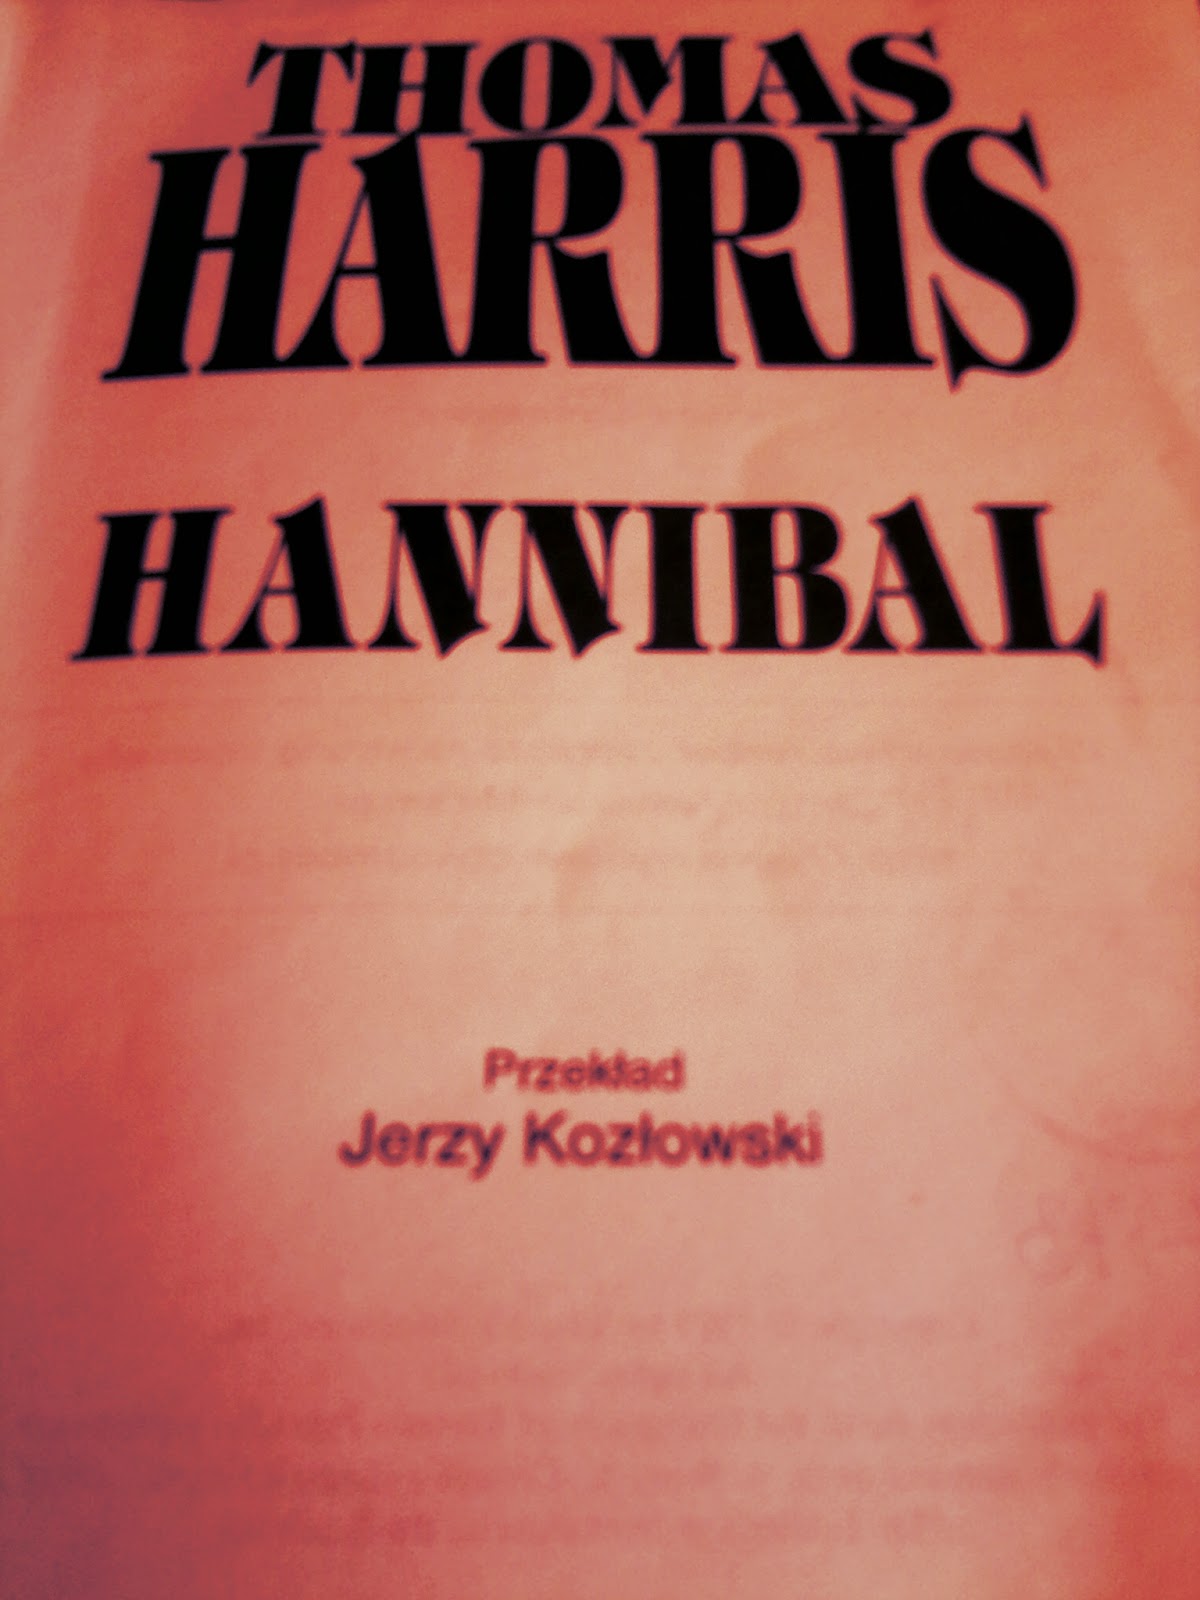 Thomas Harris "Hannibal"